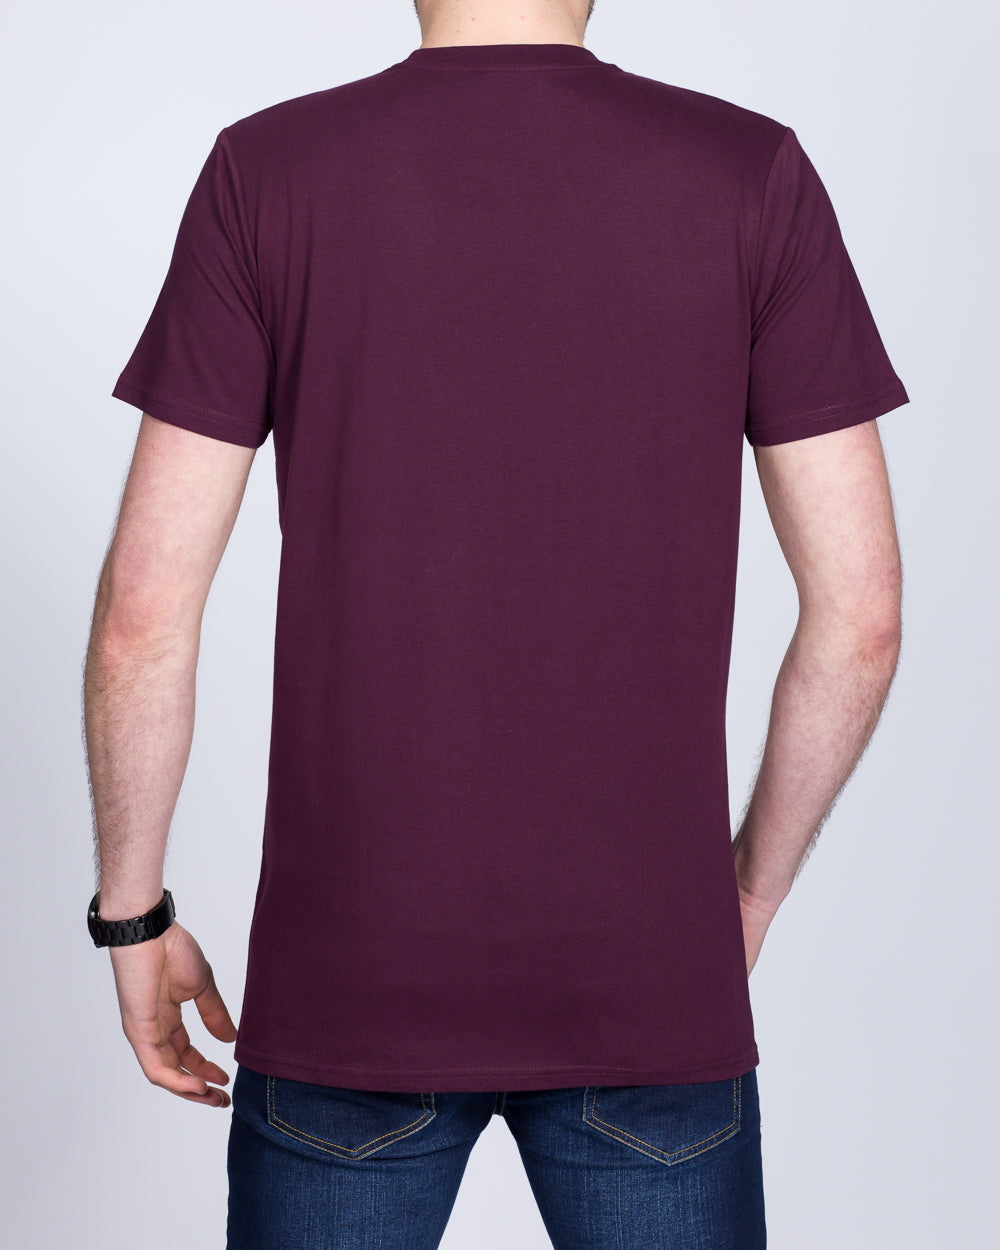 Girav Sydney Tall T-Shirt (bordeaux)